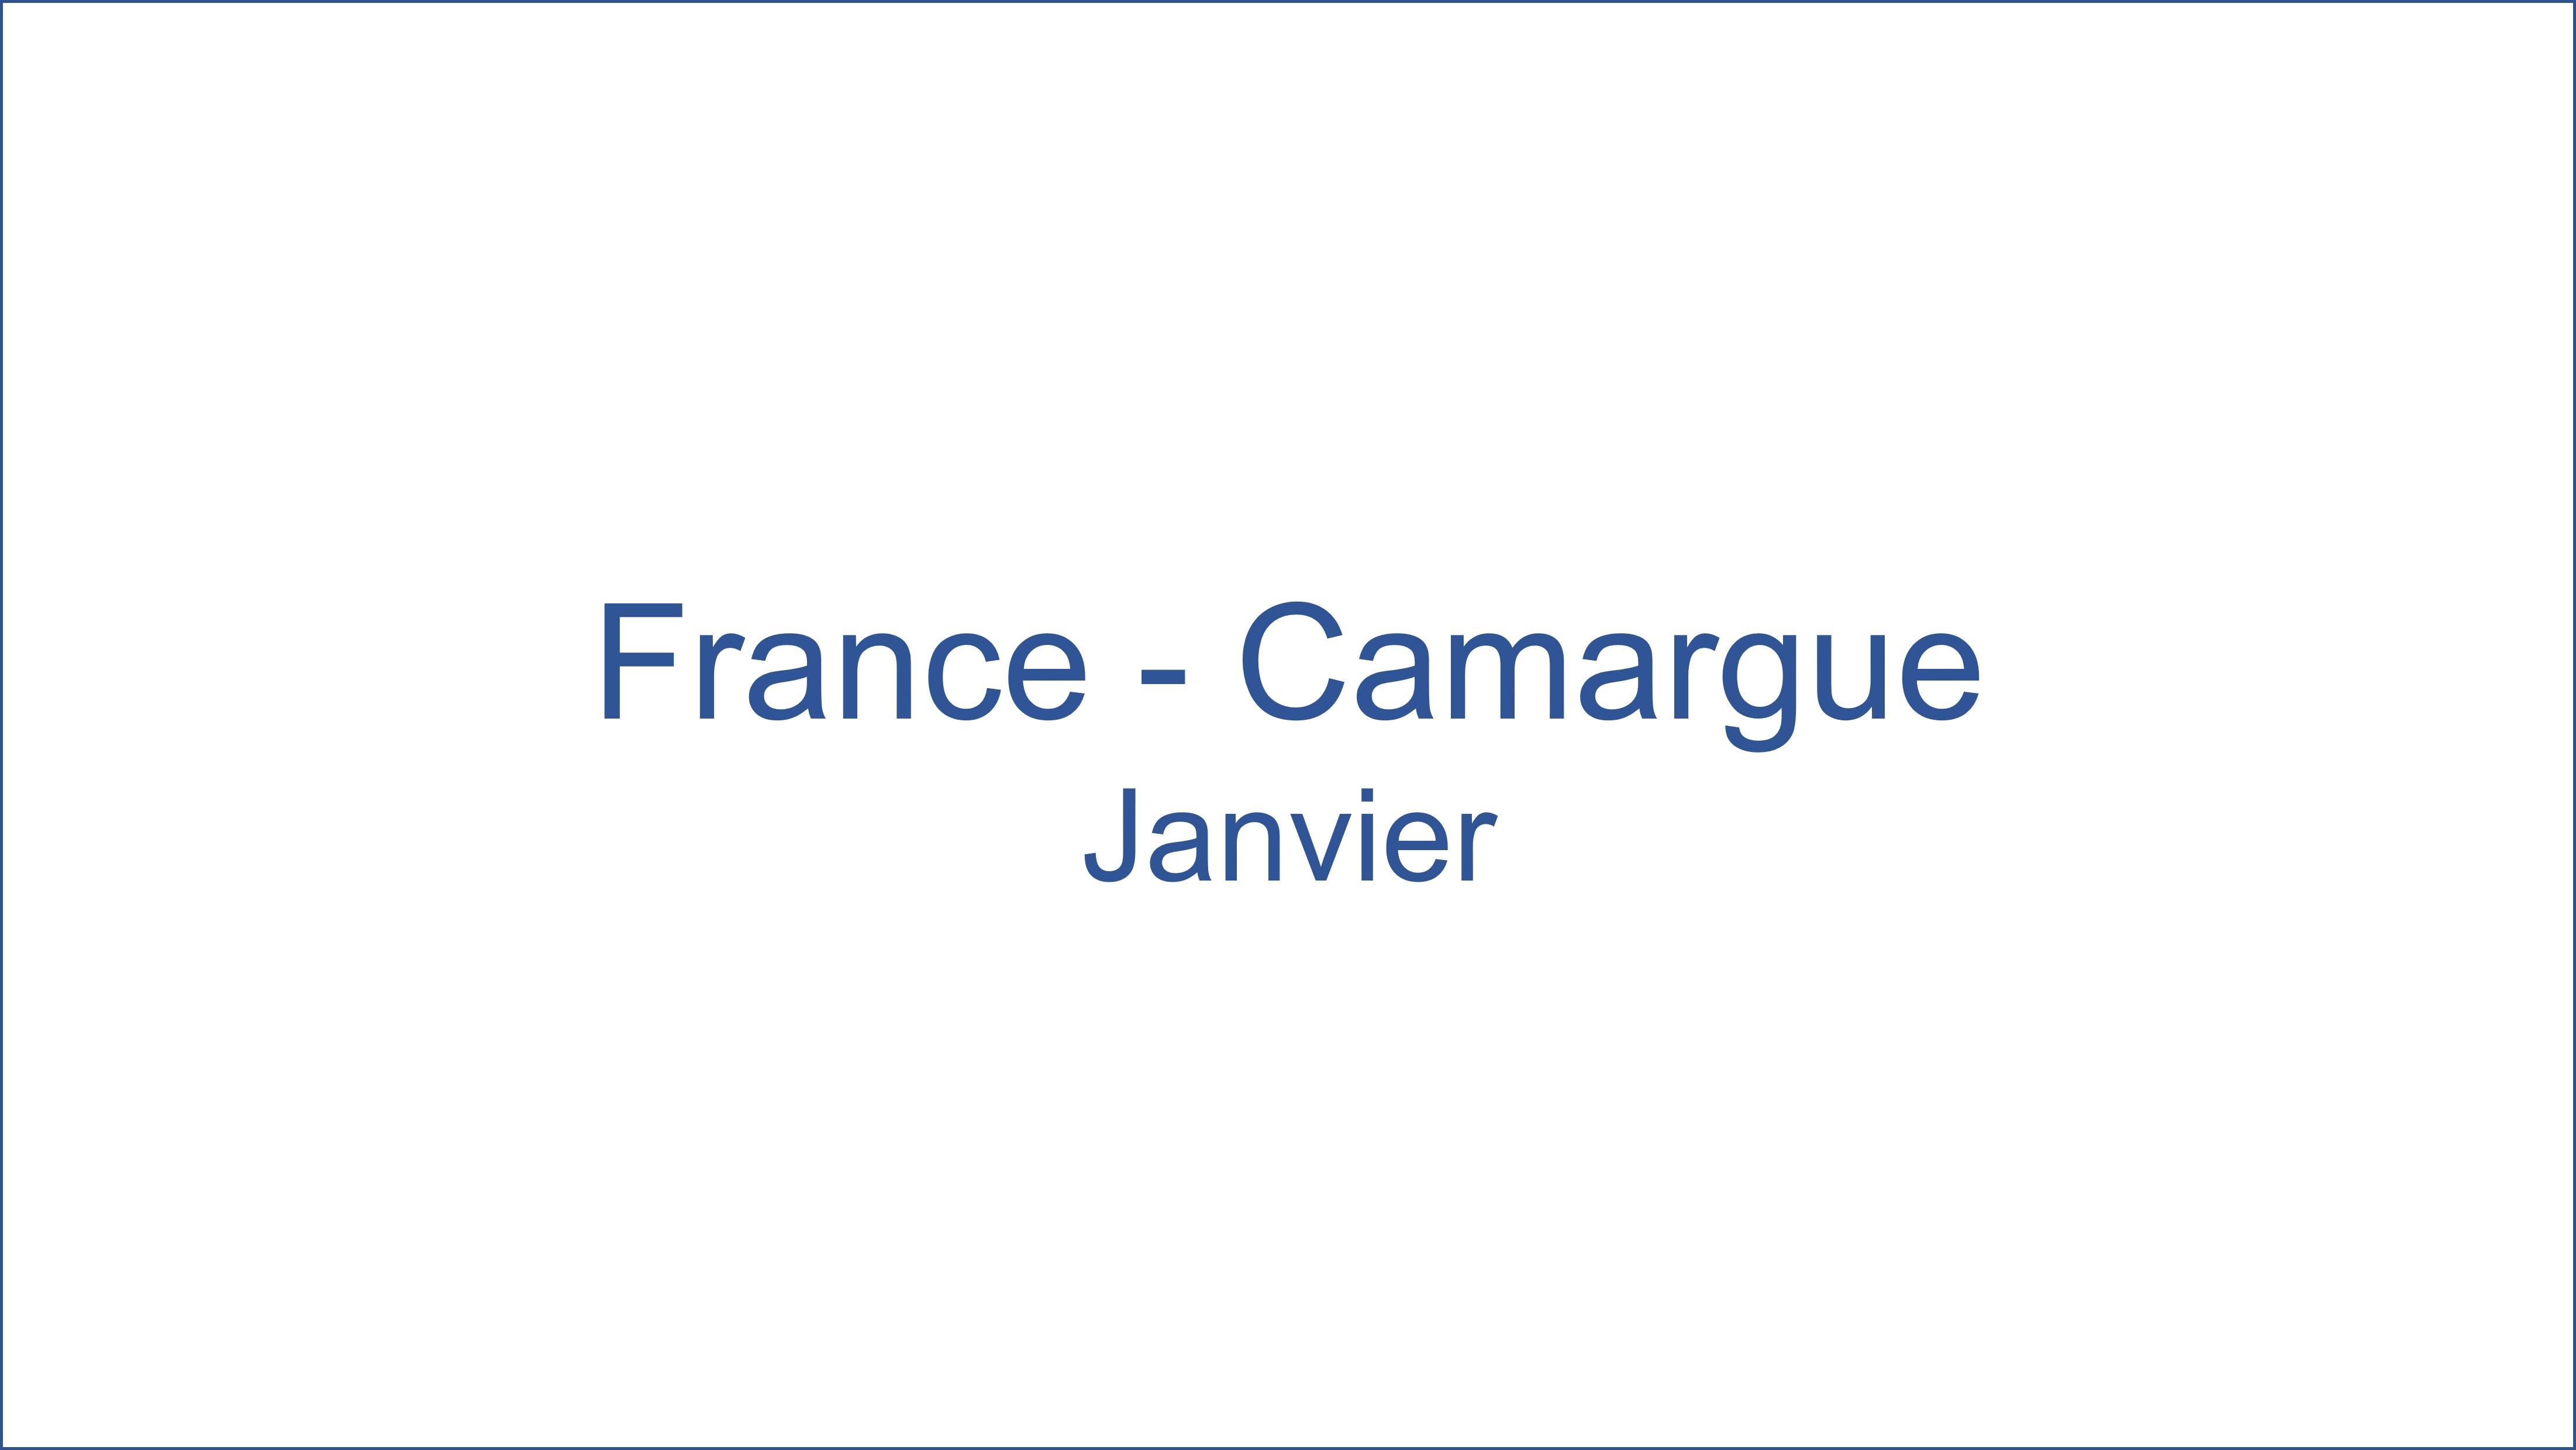 France - Camargue 01/2021